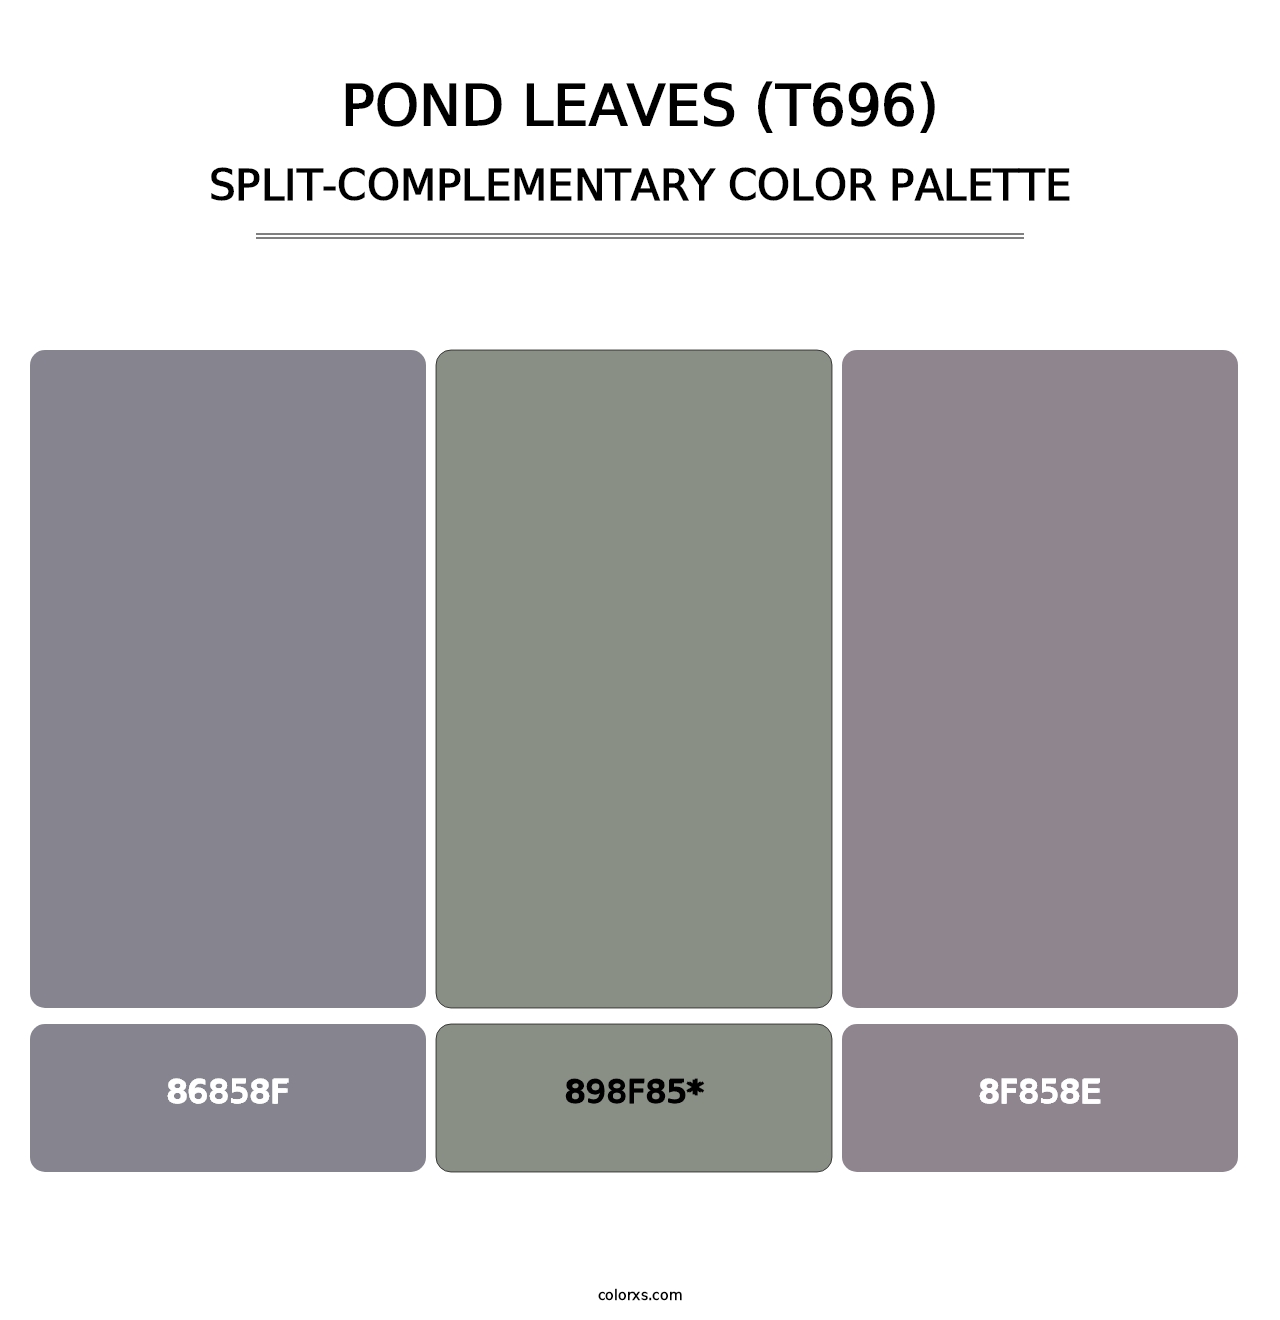 Pond Leaves (T696) - Split-Complementary Color Palette